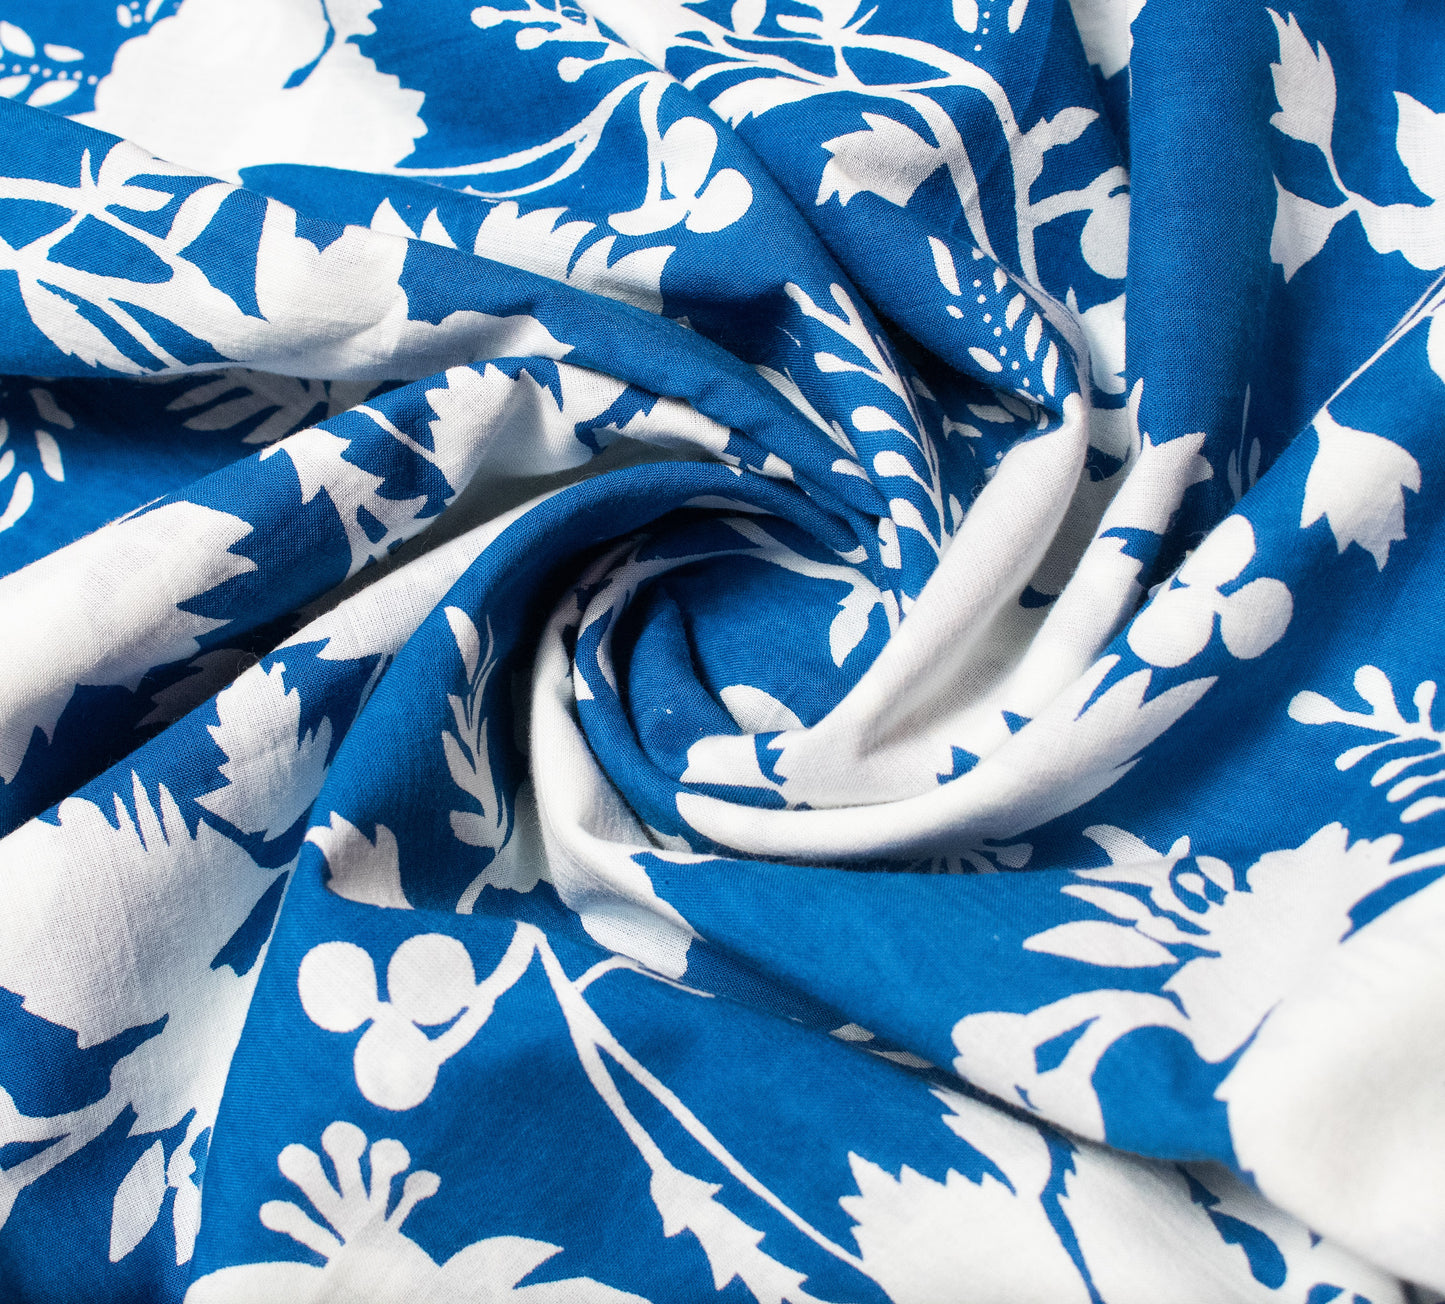 Floral Print Cotton Floral Print Design Fabric    -  SKU: GG16920D